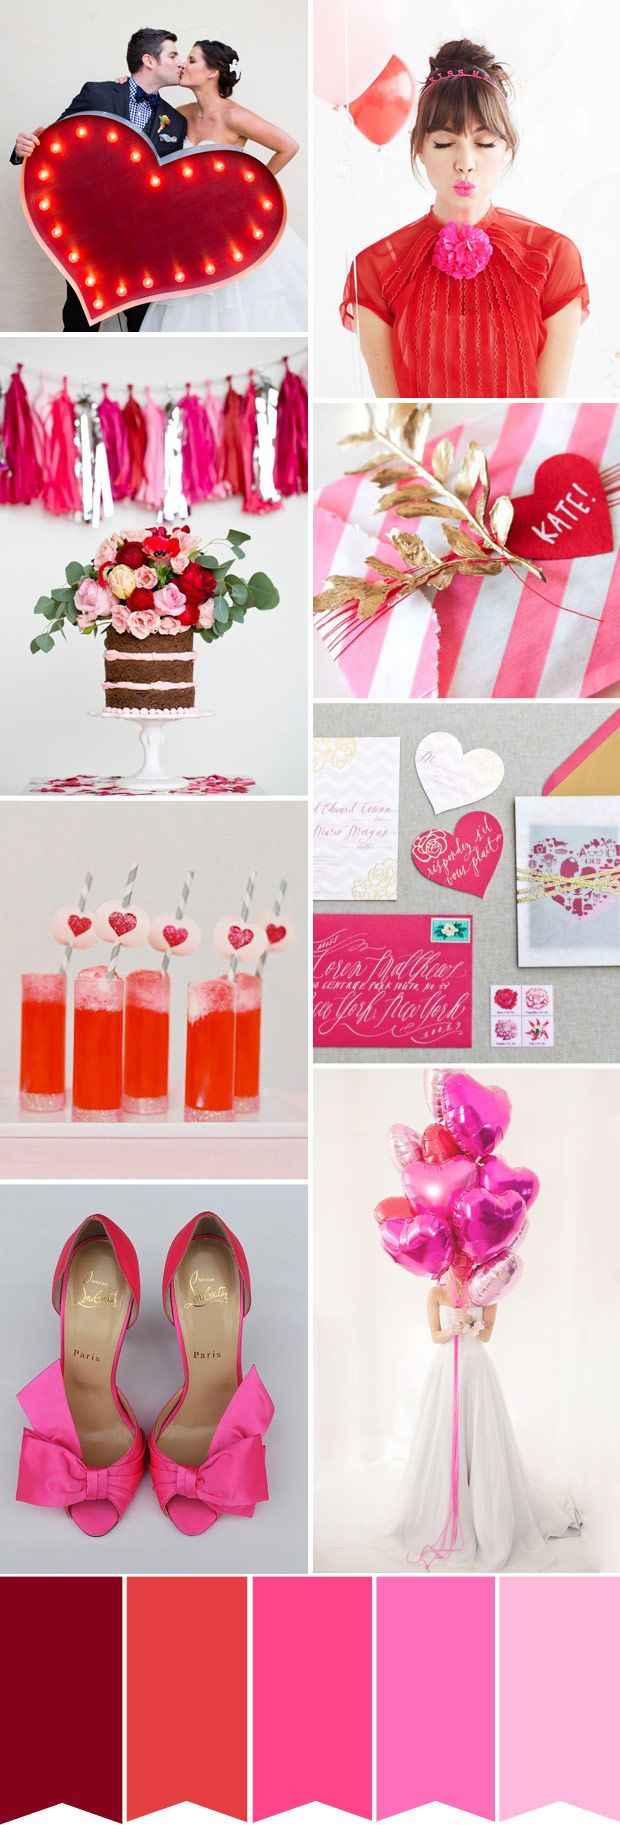 Hearts & Flowers - Valentines Wedding Inspiration Board